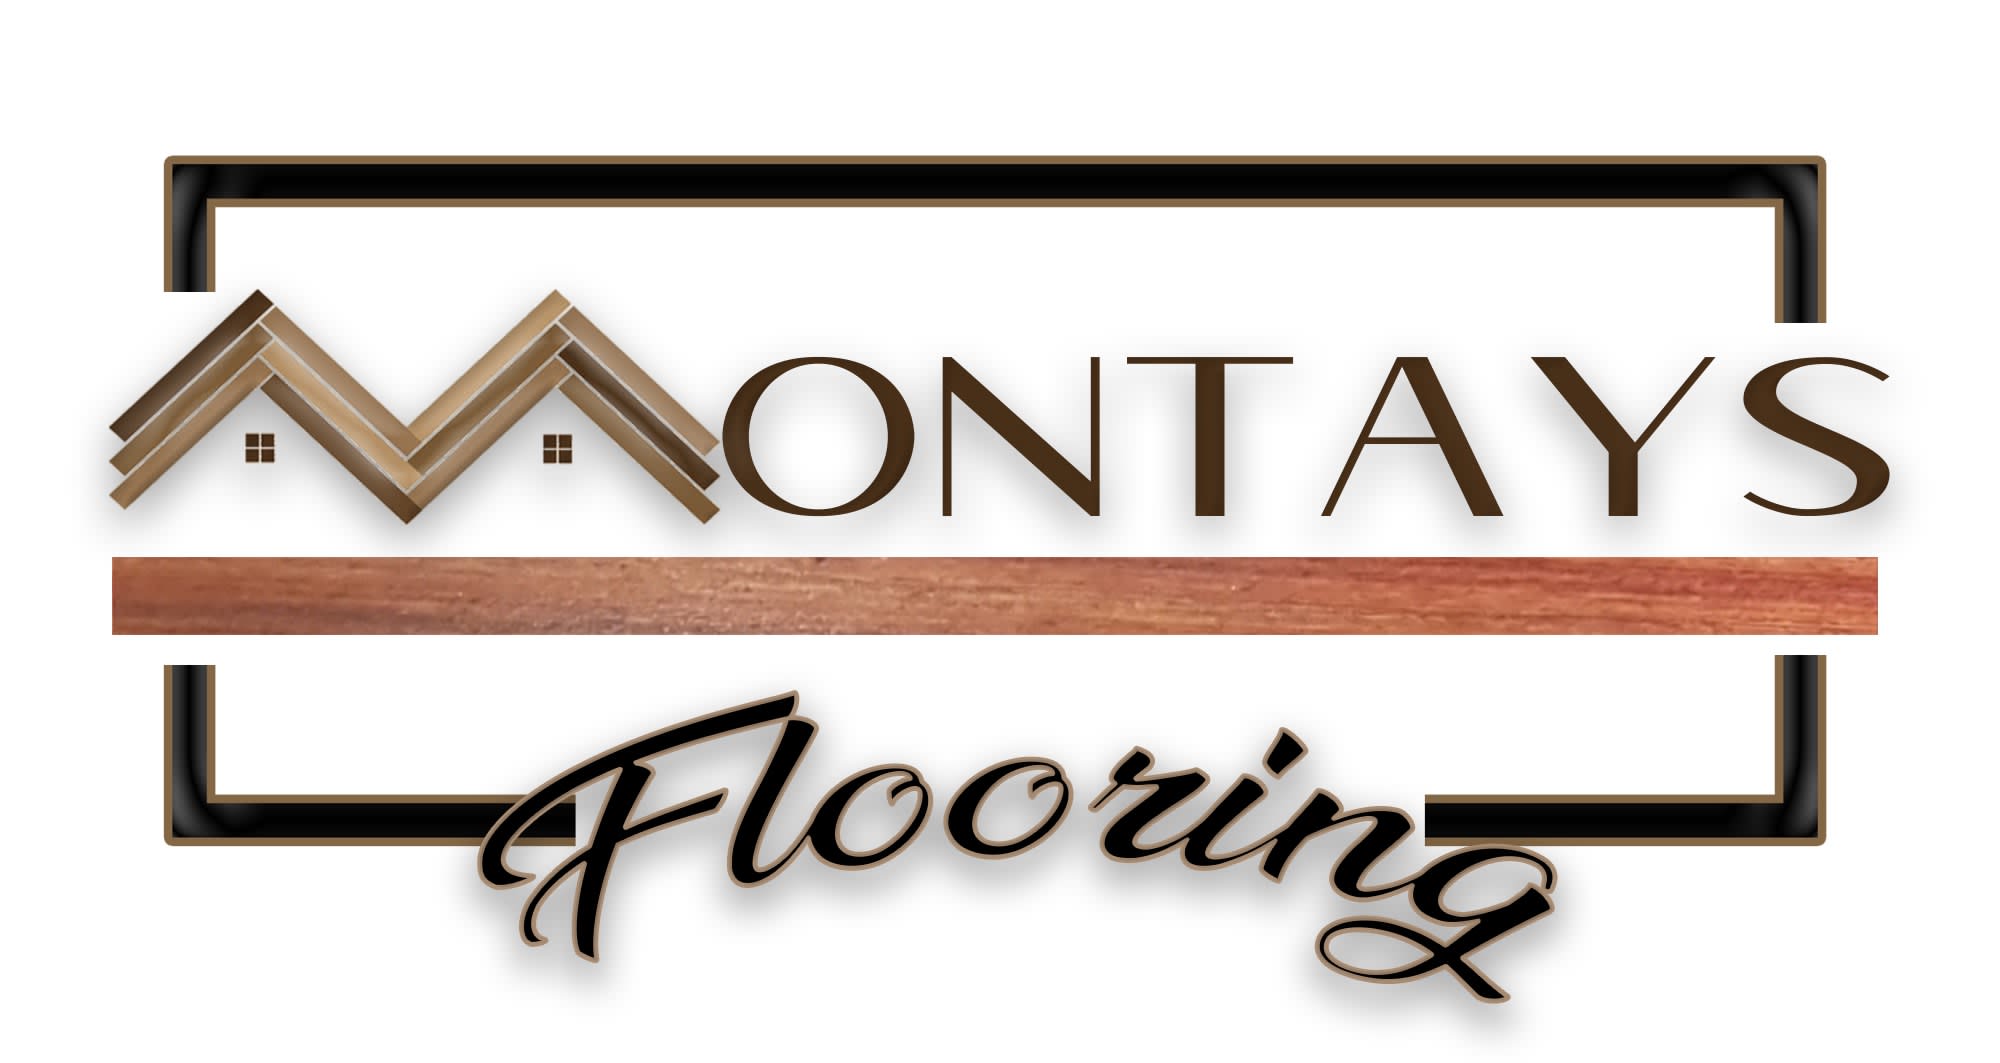 Montays Flooring